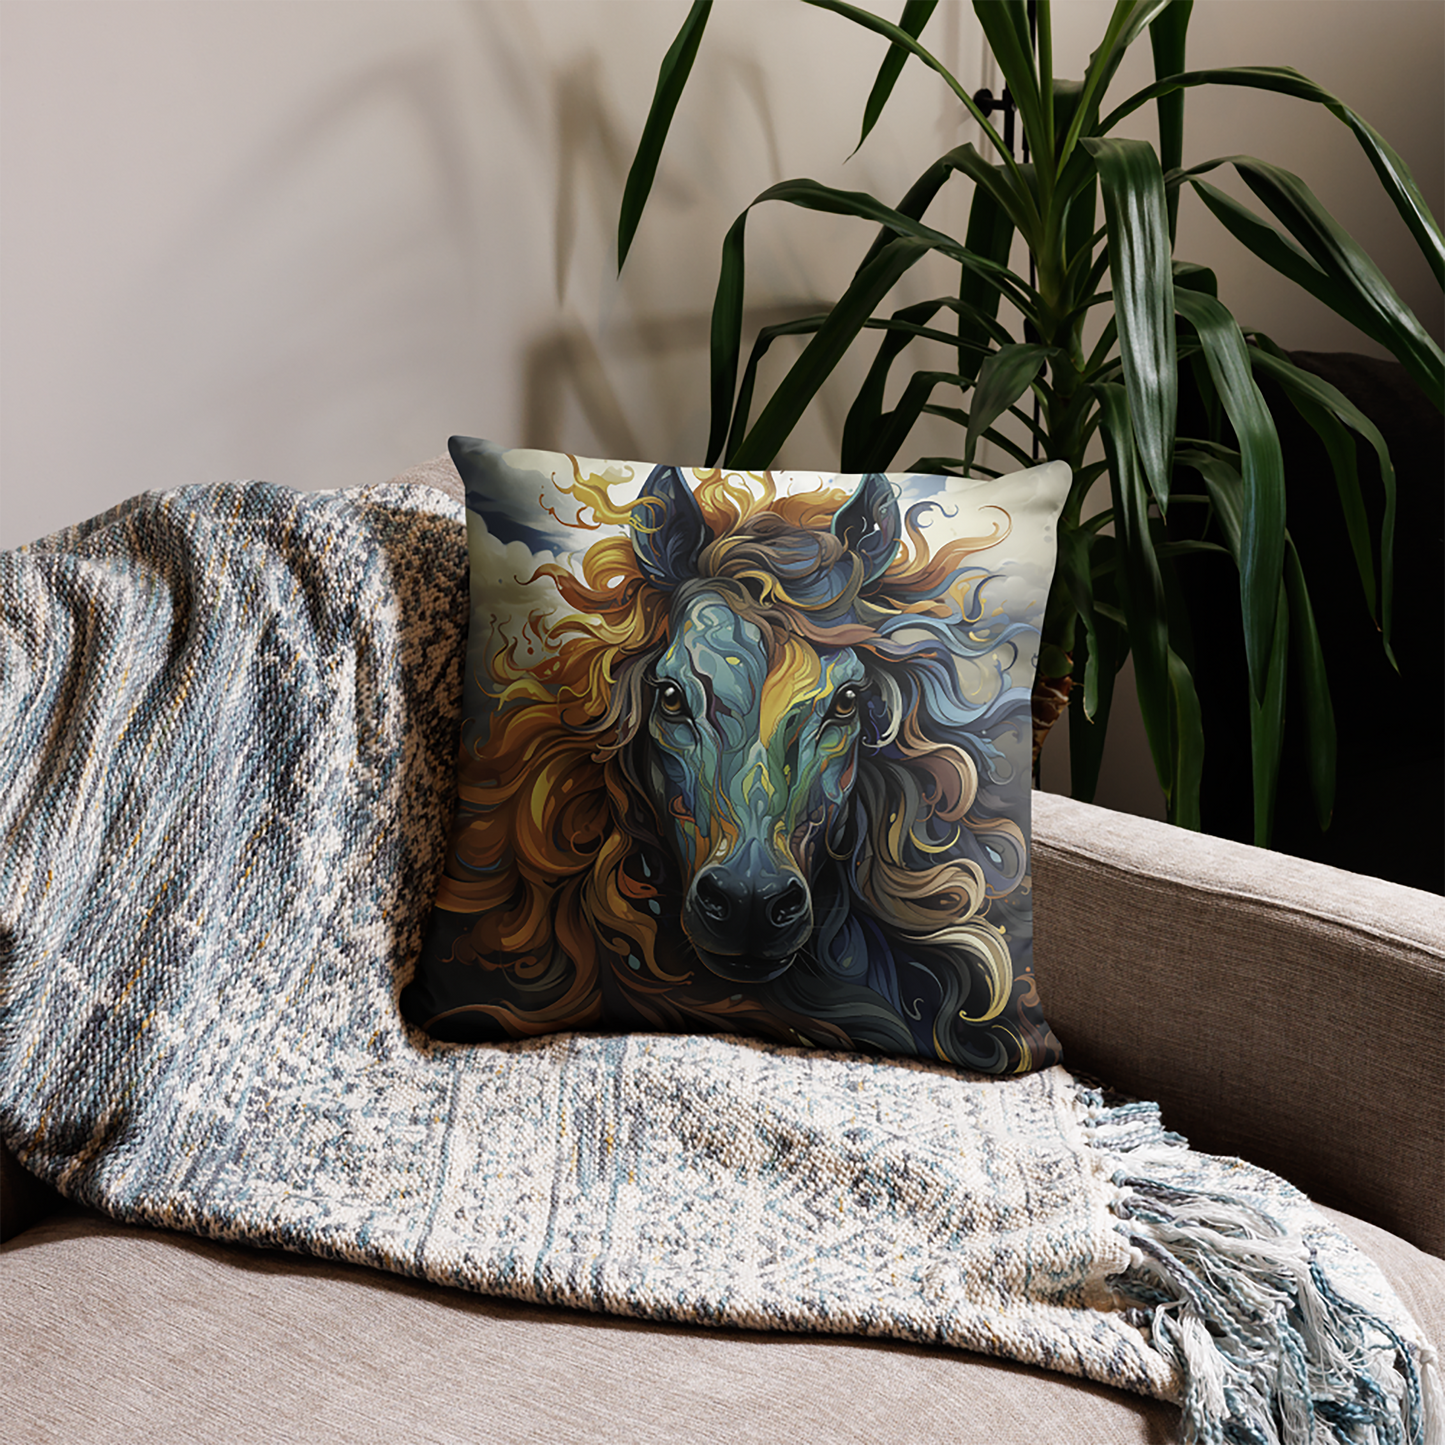 Horse Throw Pillow Fantasy Horse Spirit Illustration Polyester Decorative Cushion 18x18